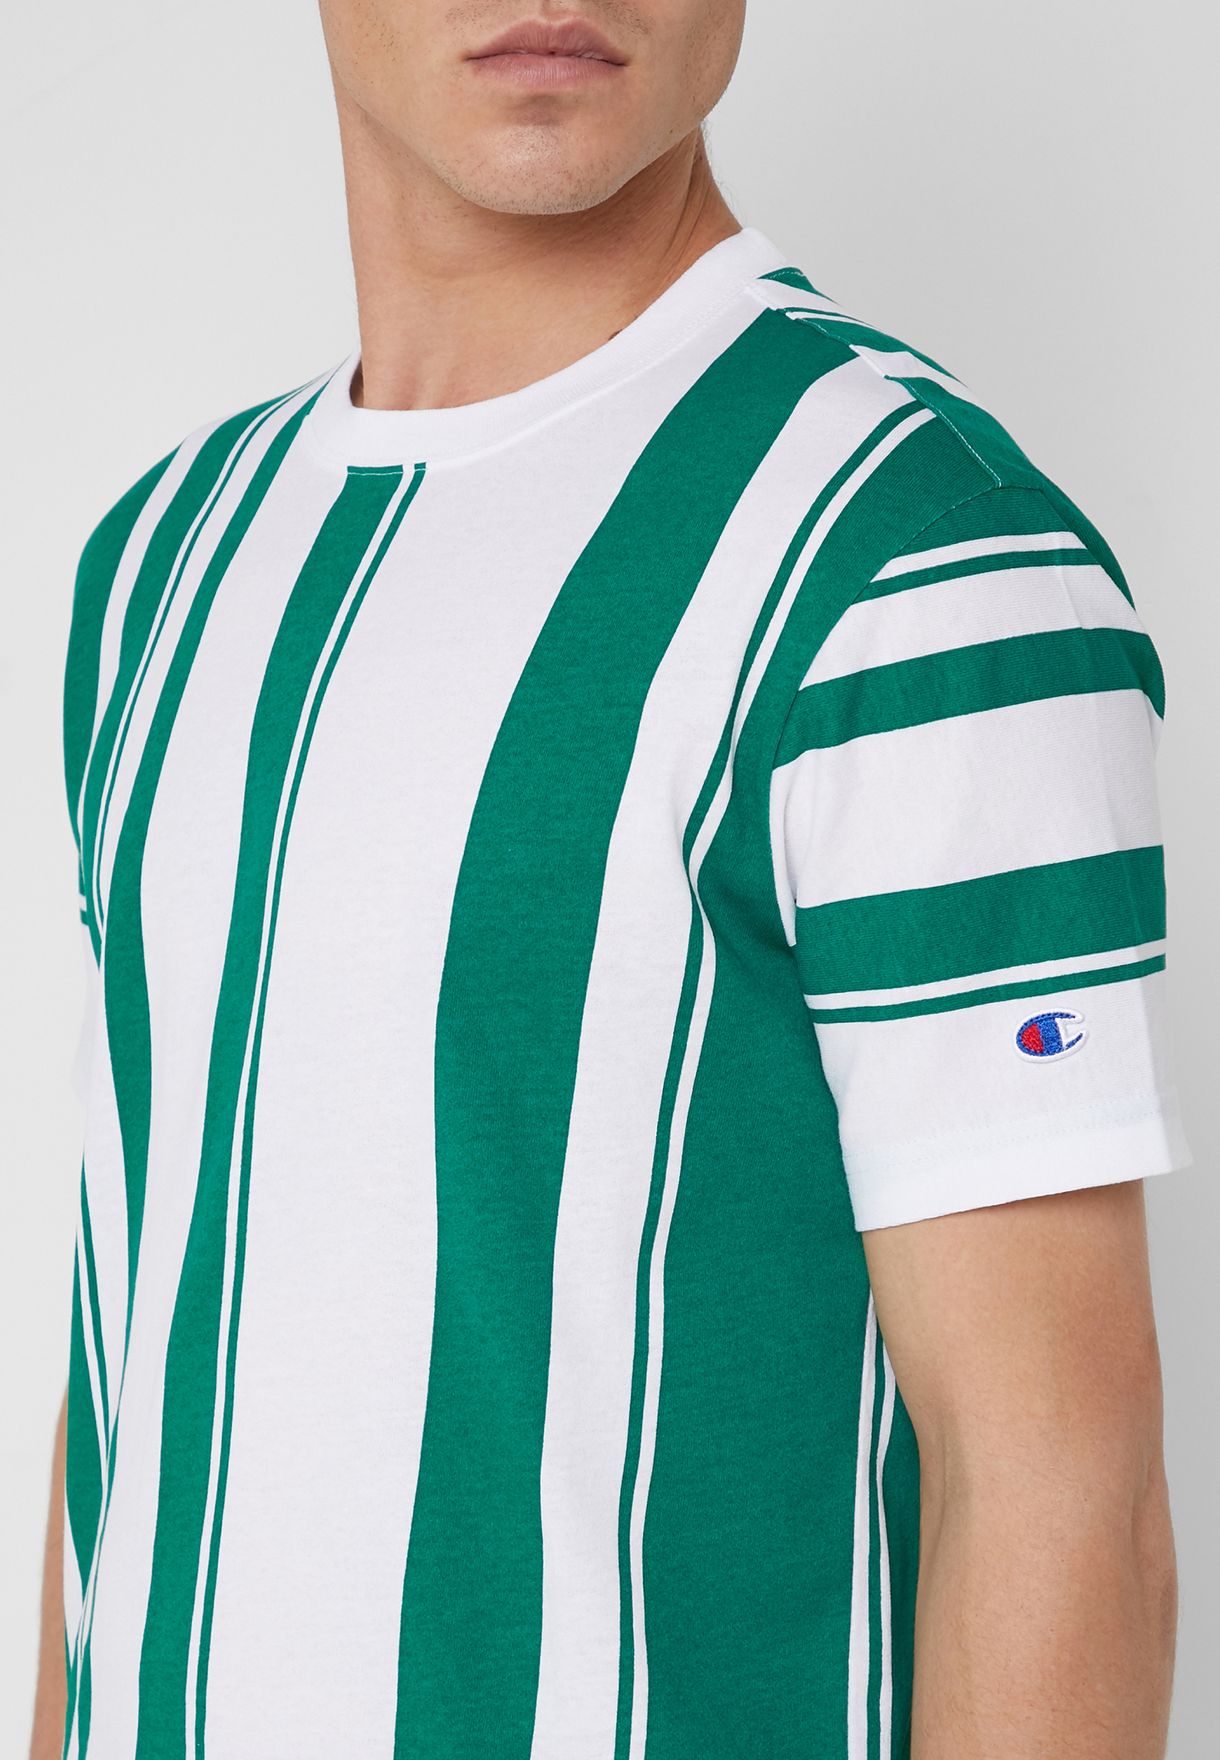 Buy Striped T-Shirt Men in MENA, Worldwide